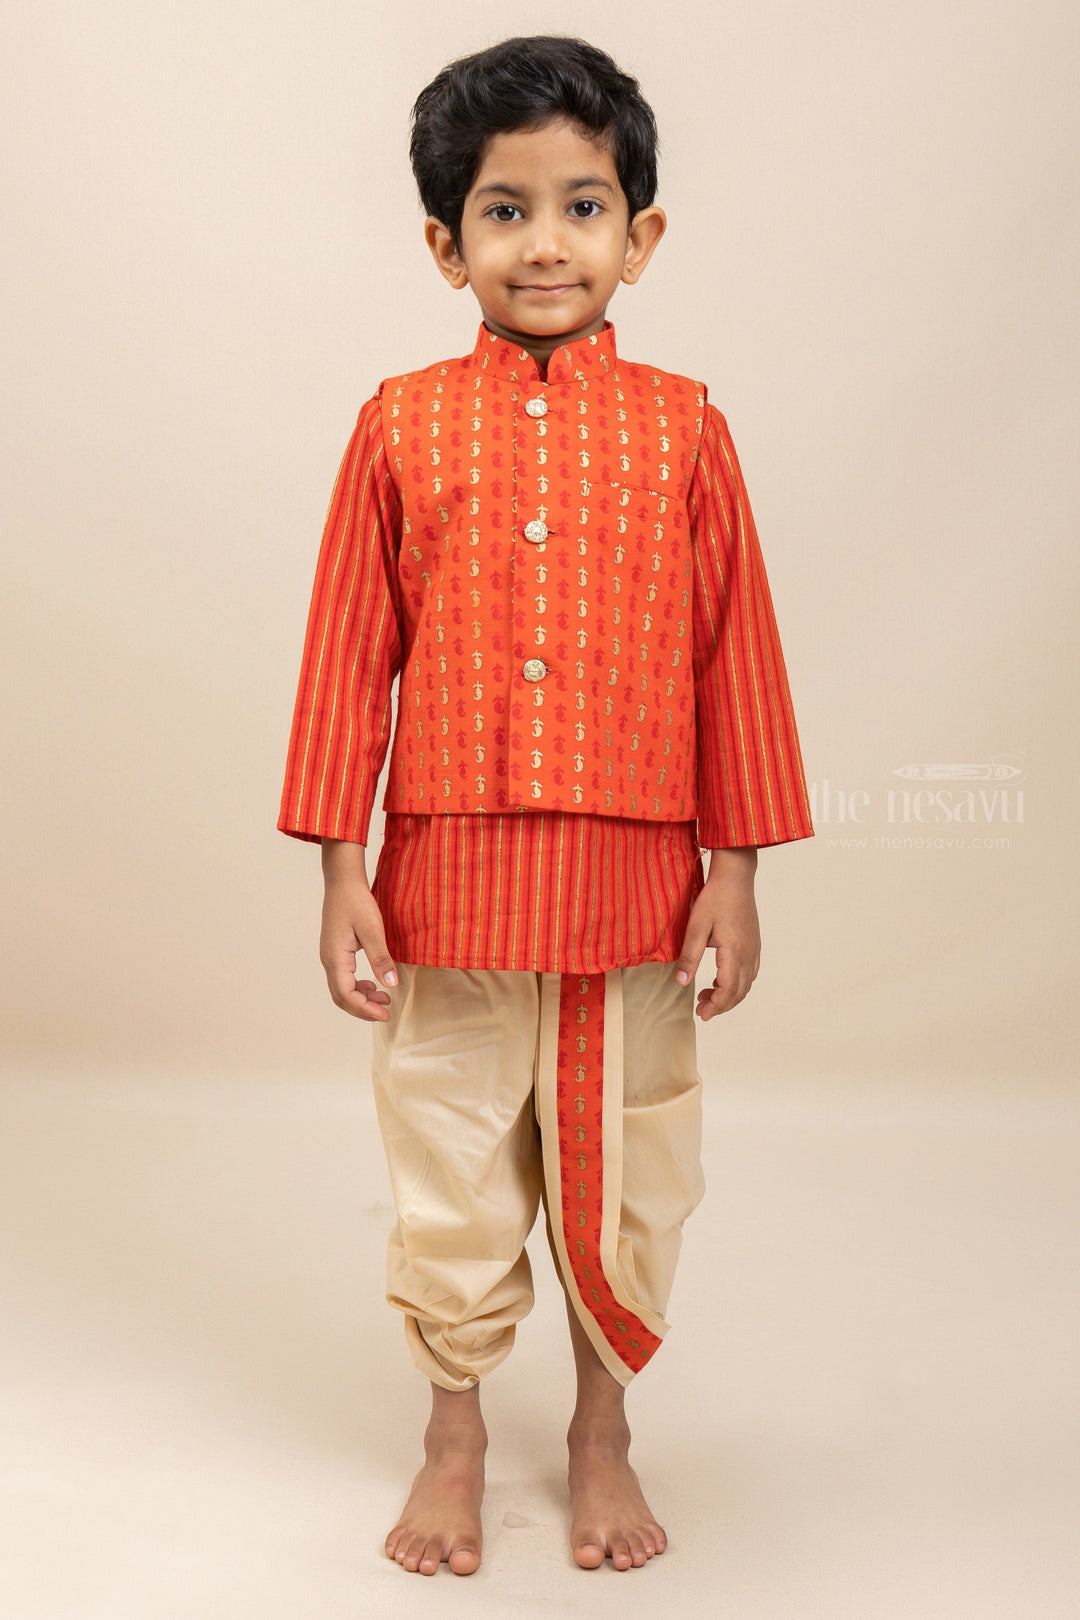 The Nesavu Ethnic Sets Opulent Orange Red Kurta With Overcoat And Half-White Dhoti For Little Boys psr silks Nesavu 14 (6M) / Orange BES248